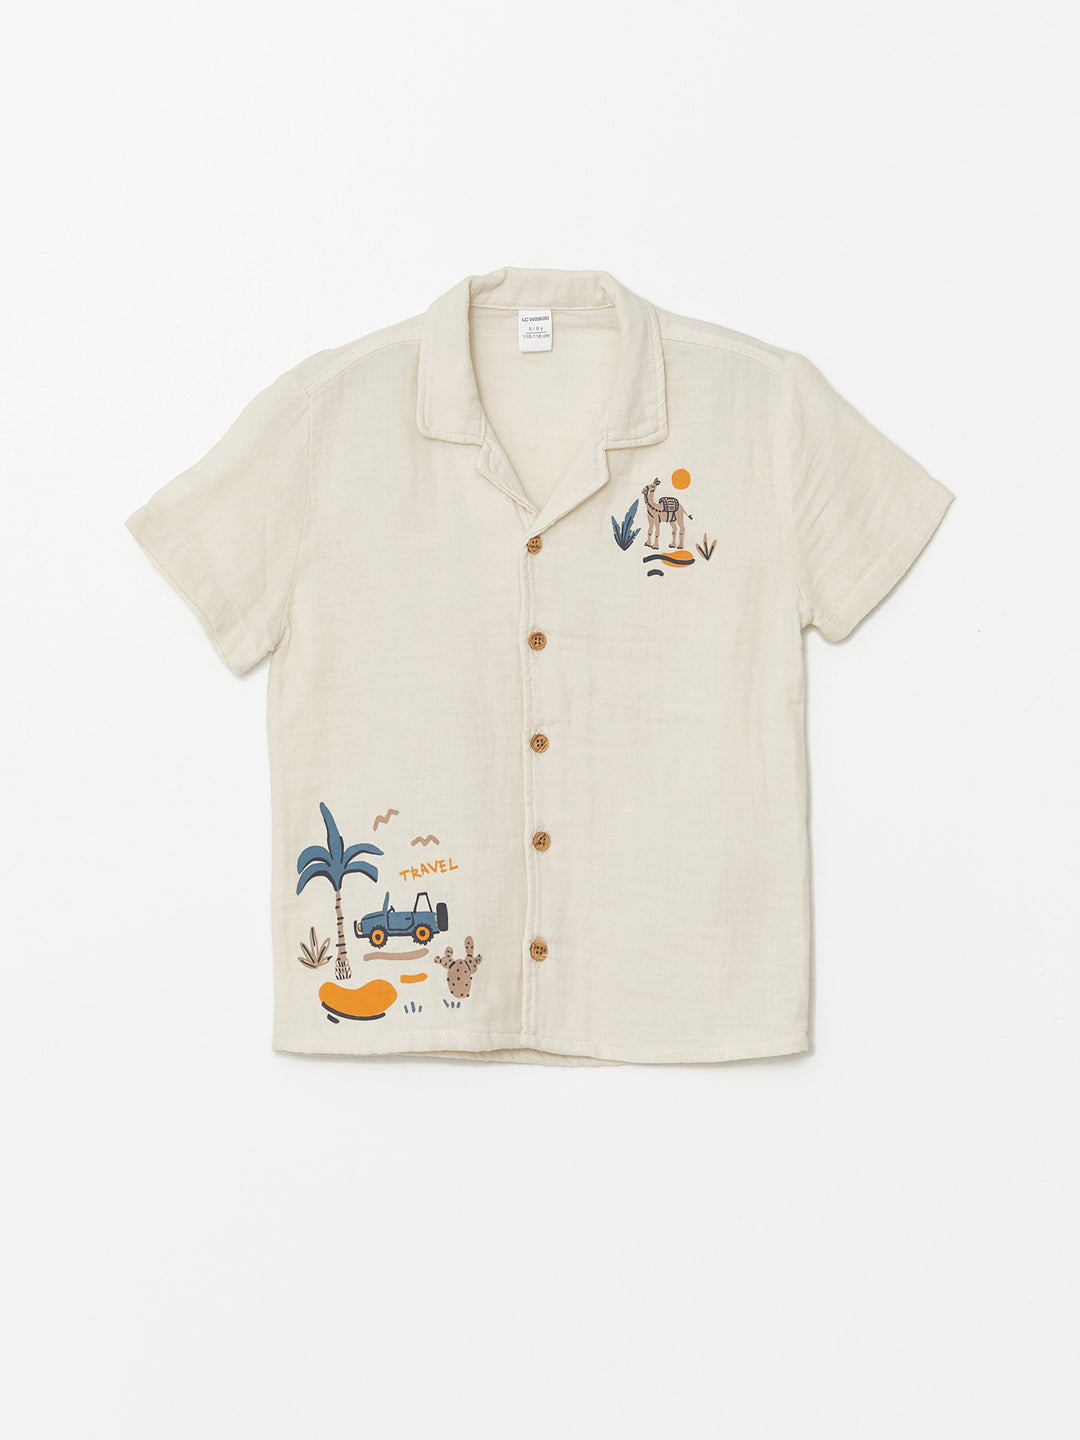 Resort Collar Short Sleeve Baby Boy Shirt and Shorts Set of 2